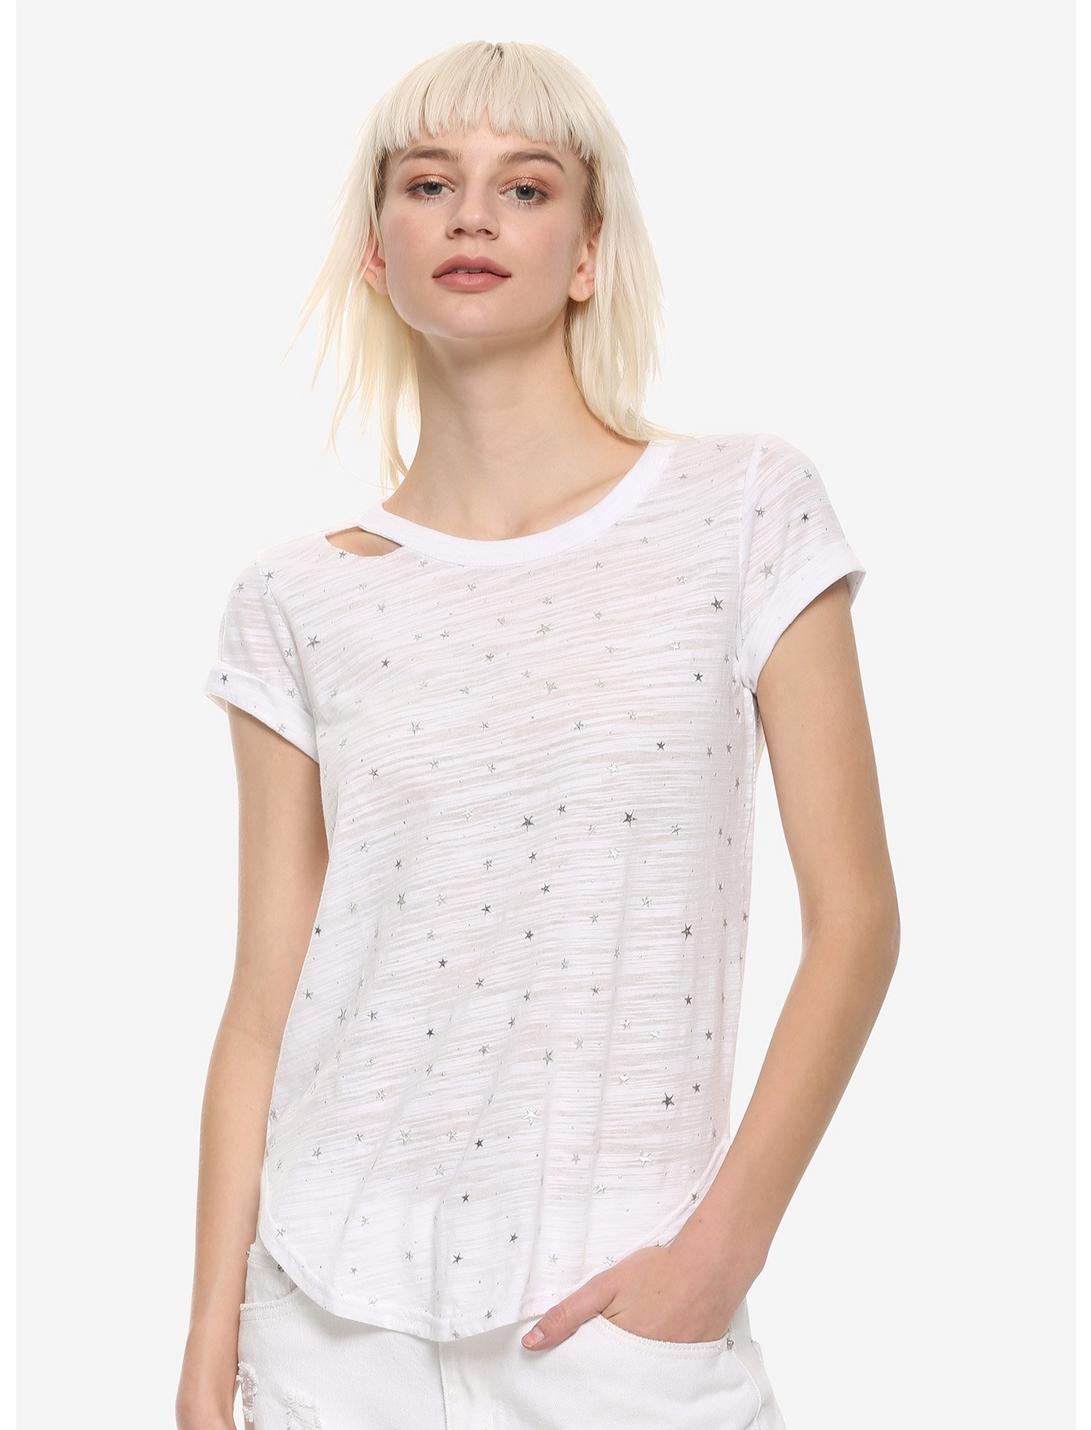 White Star Print Distressed Girls T-Shirt, GREY, hi-res